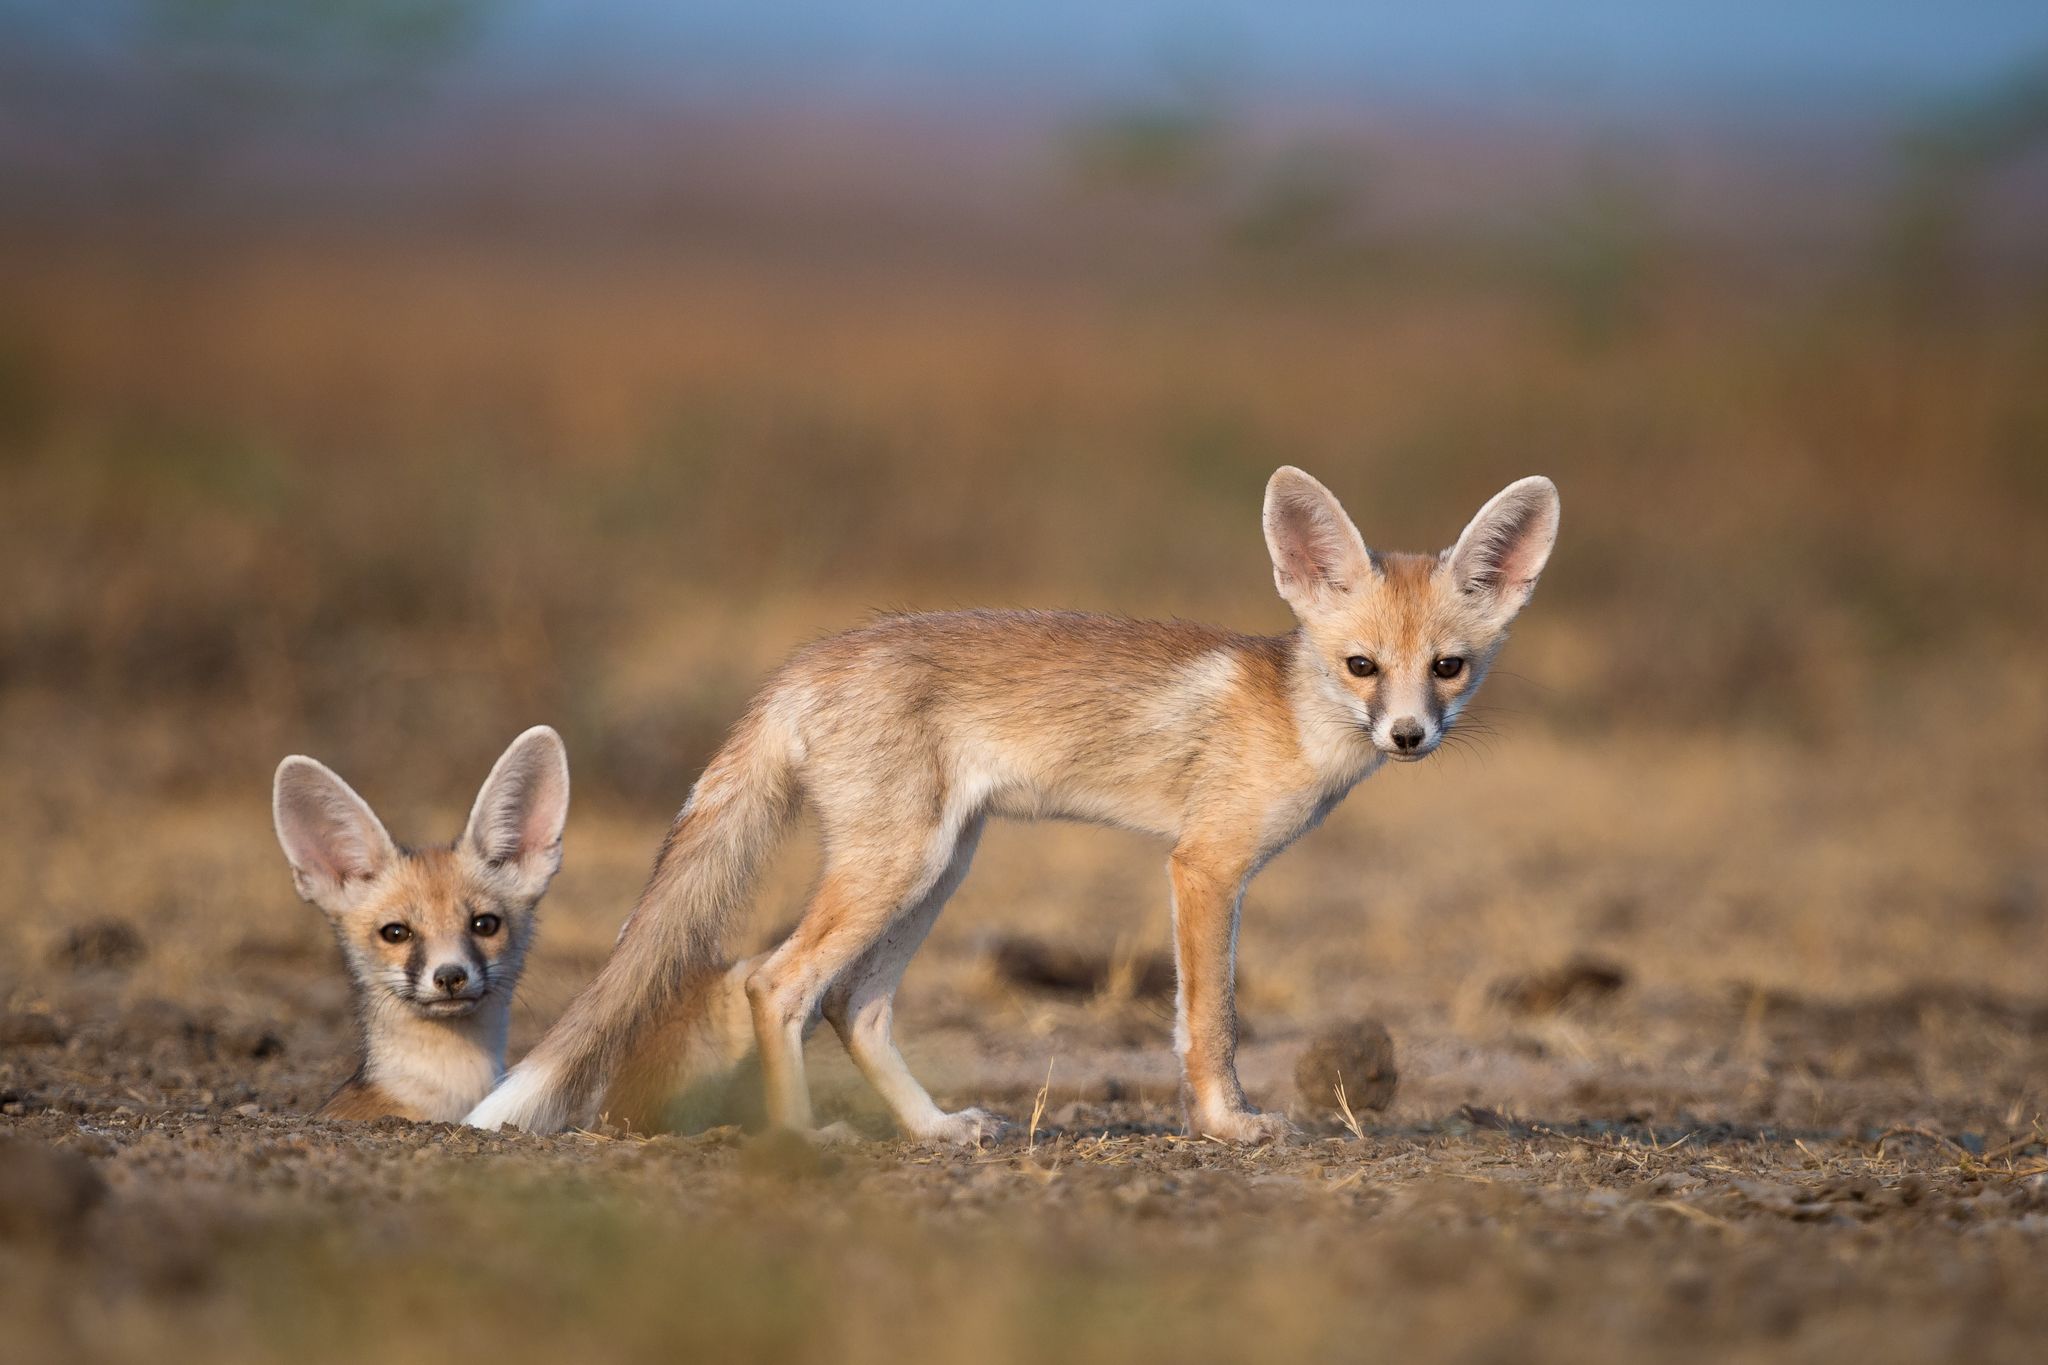 desert fox - Google zoeken | Desert animals ❤ | Pinterest ...